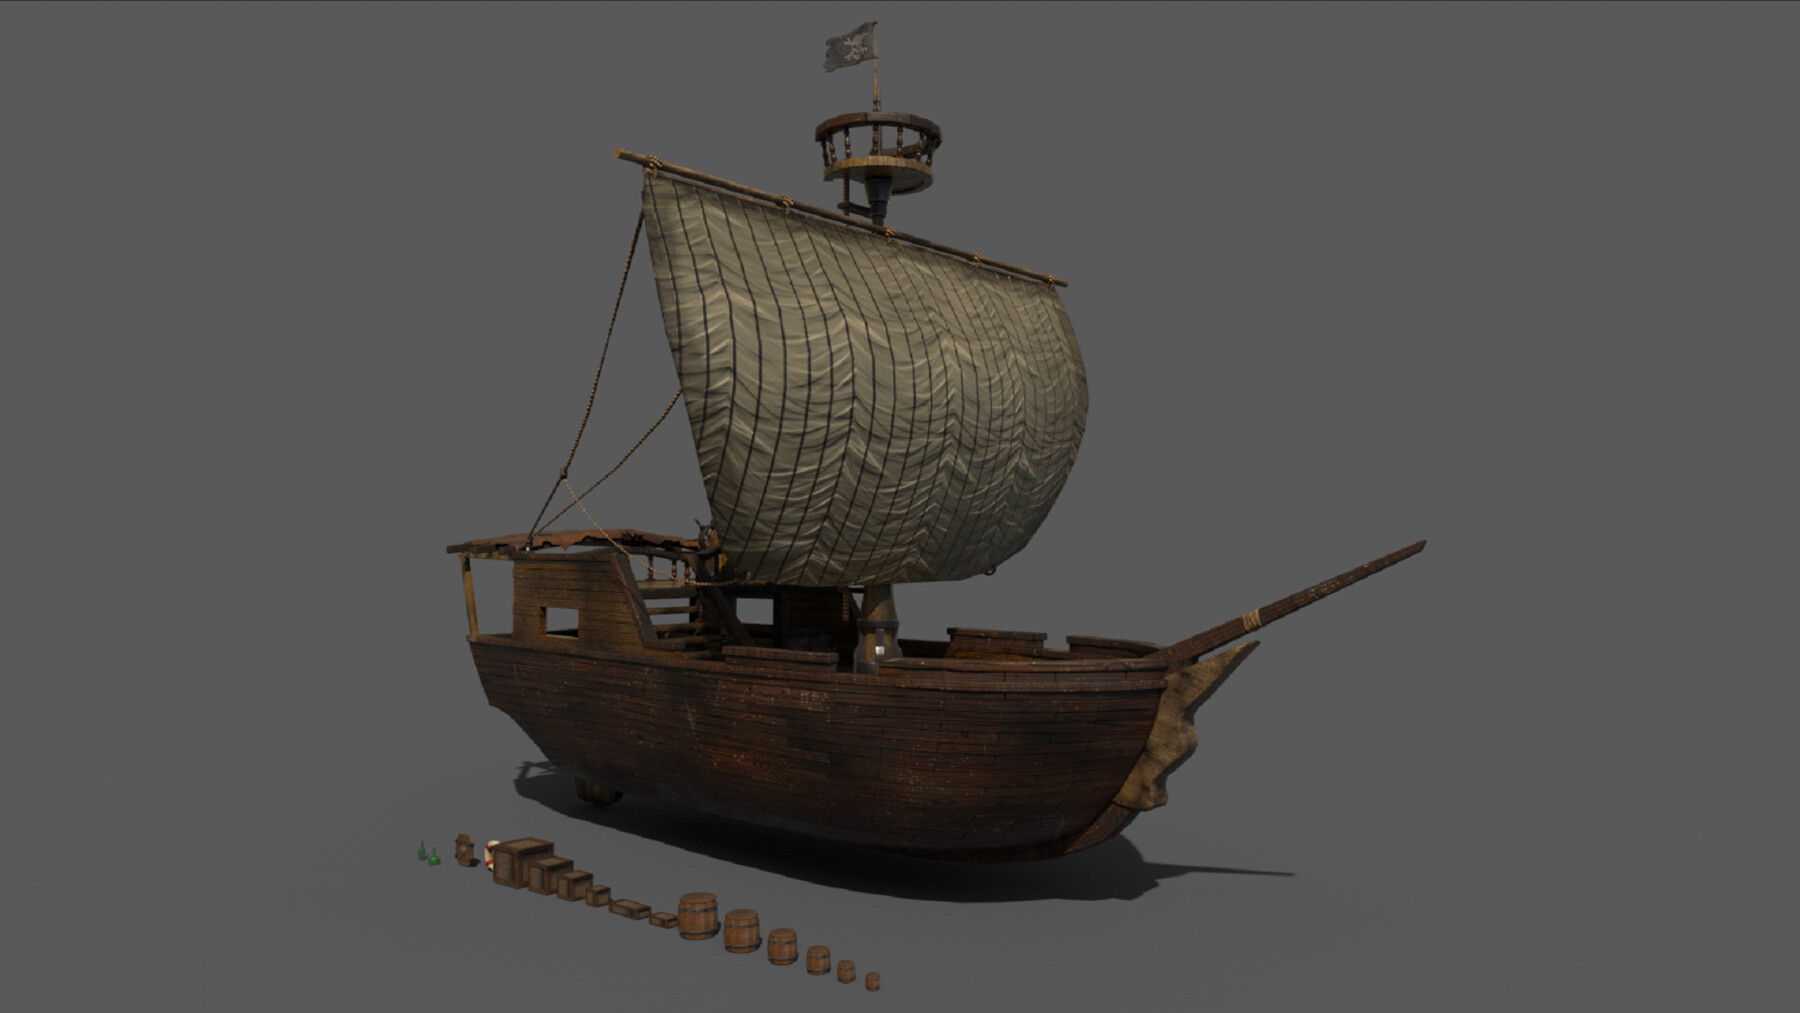 Voyage of the Seas – Pirate Ships - EliteCreatures - 3D Model Shop